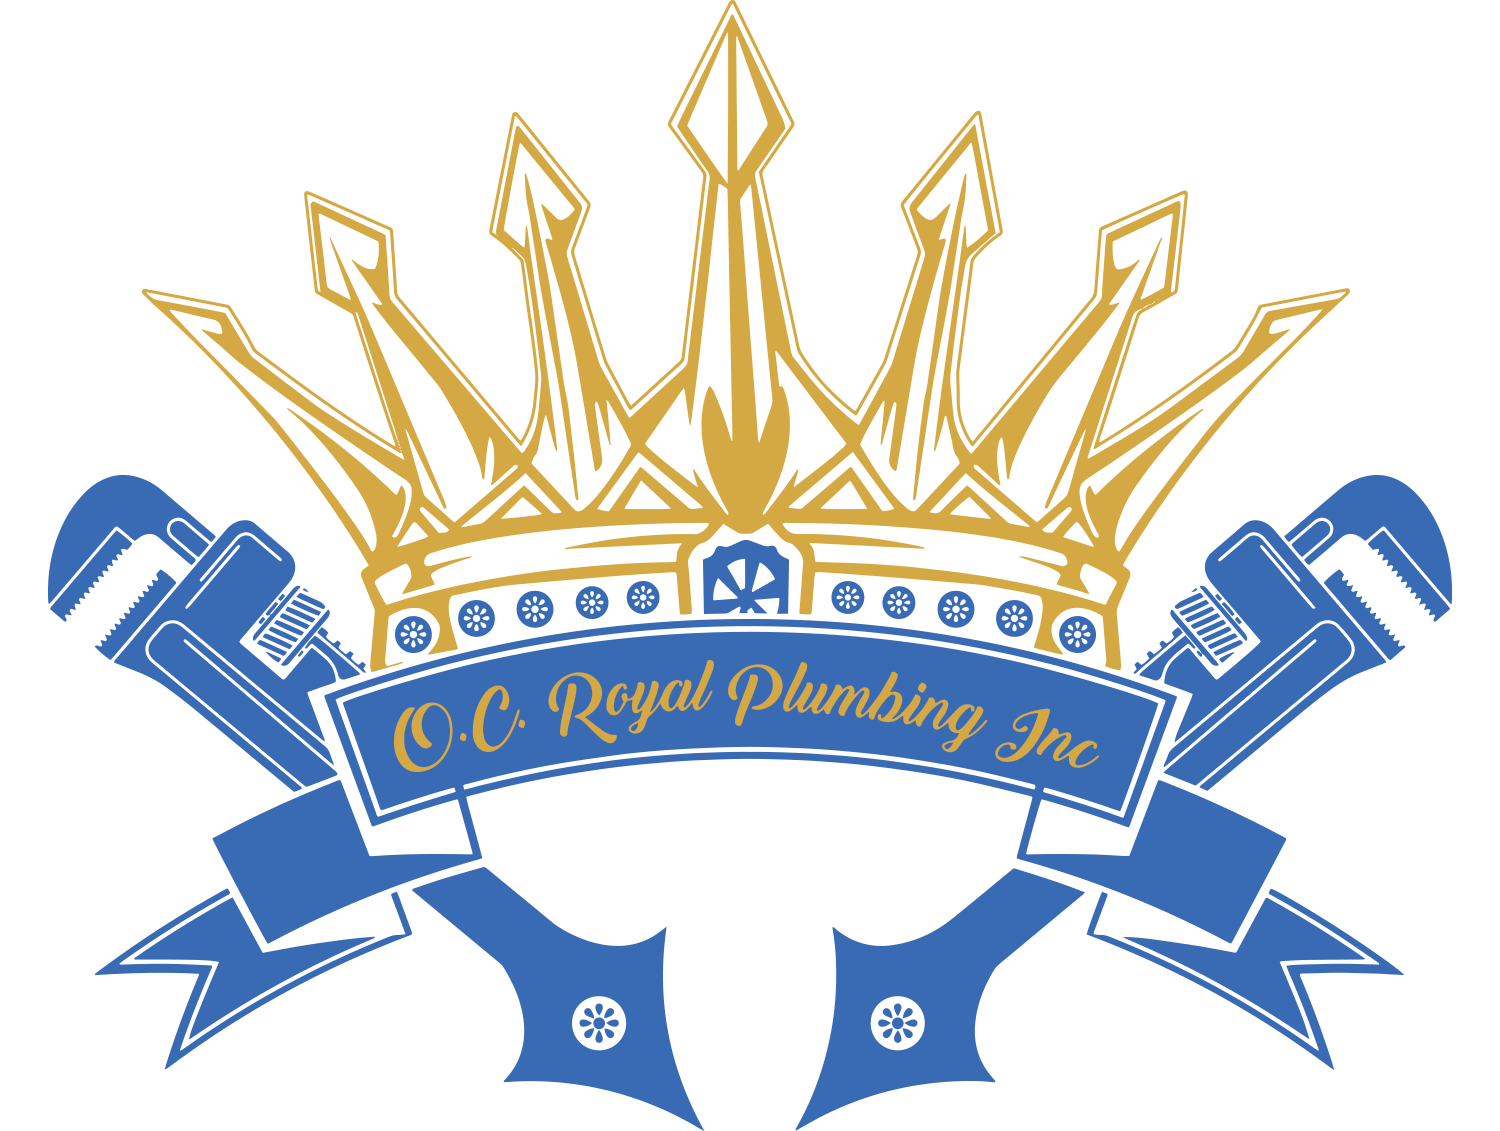 OC Royal Plumbing